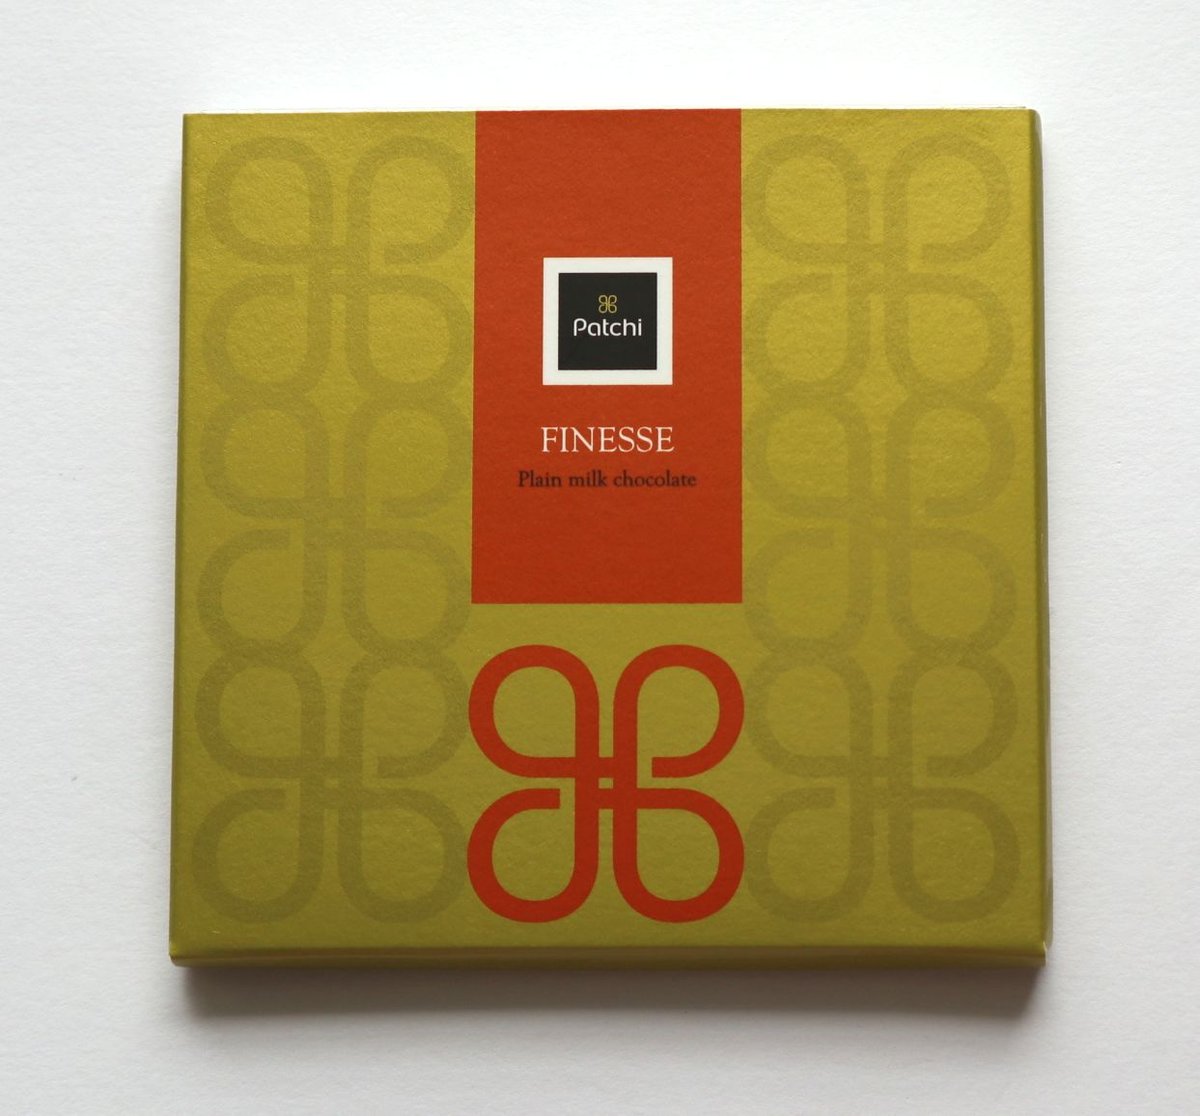 Patchi 高級チョコレート詰め合わせ 500g×2箱